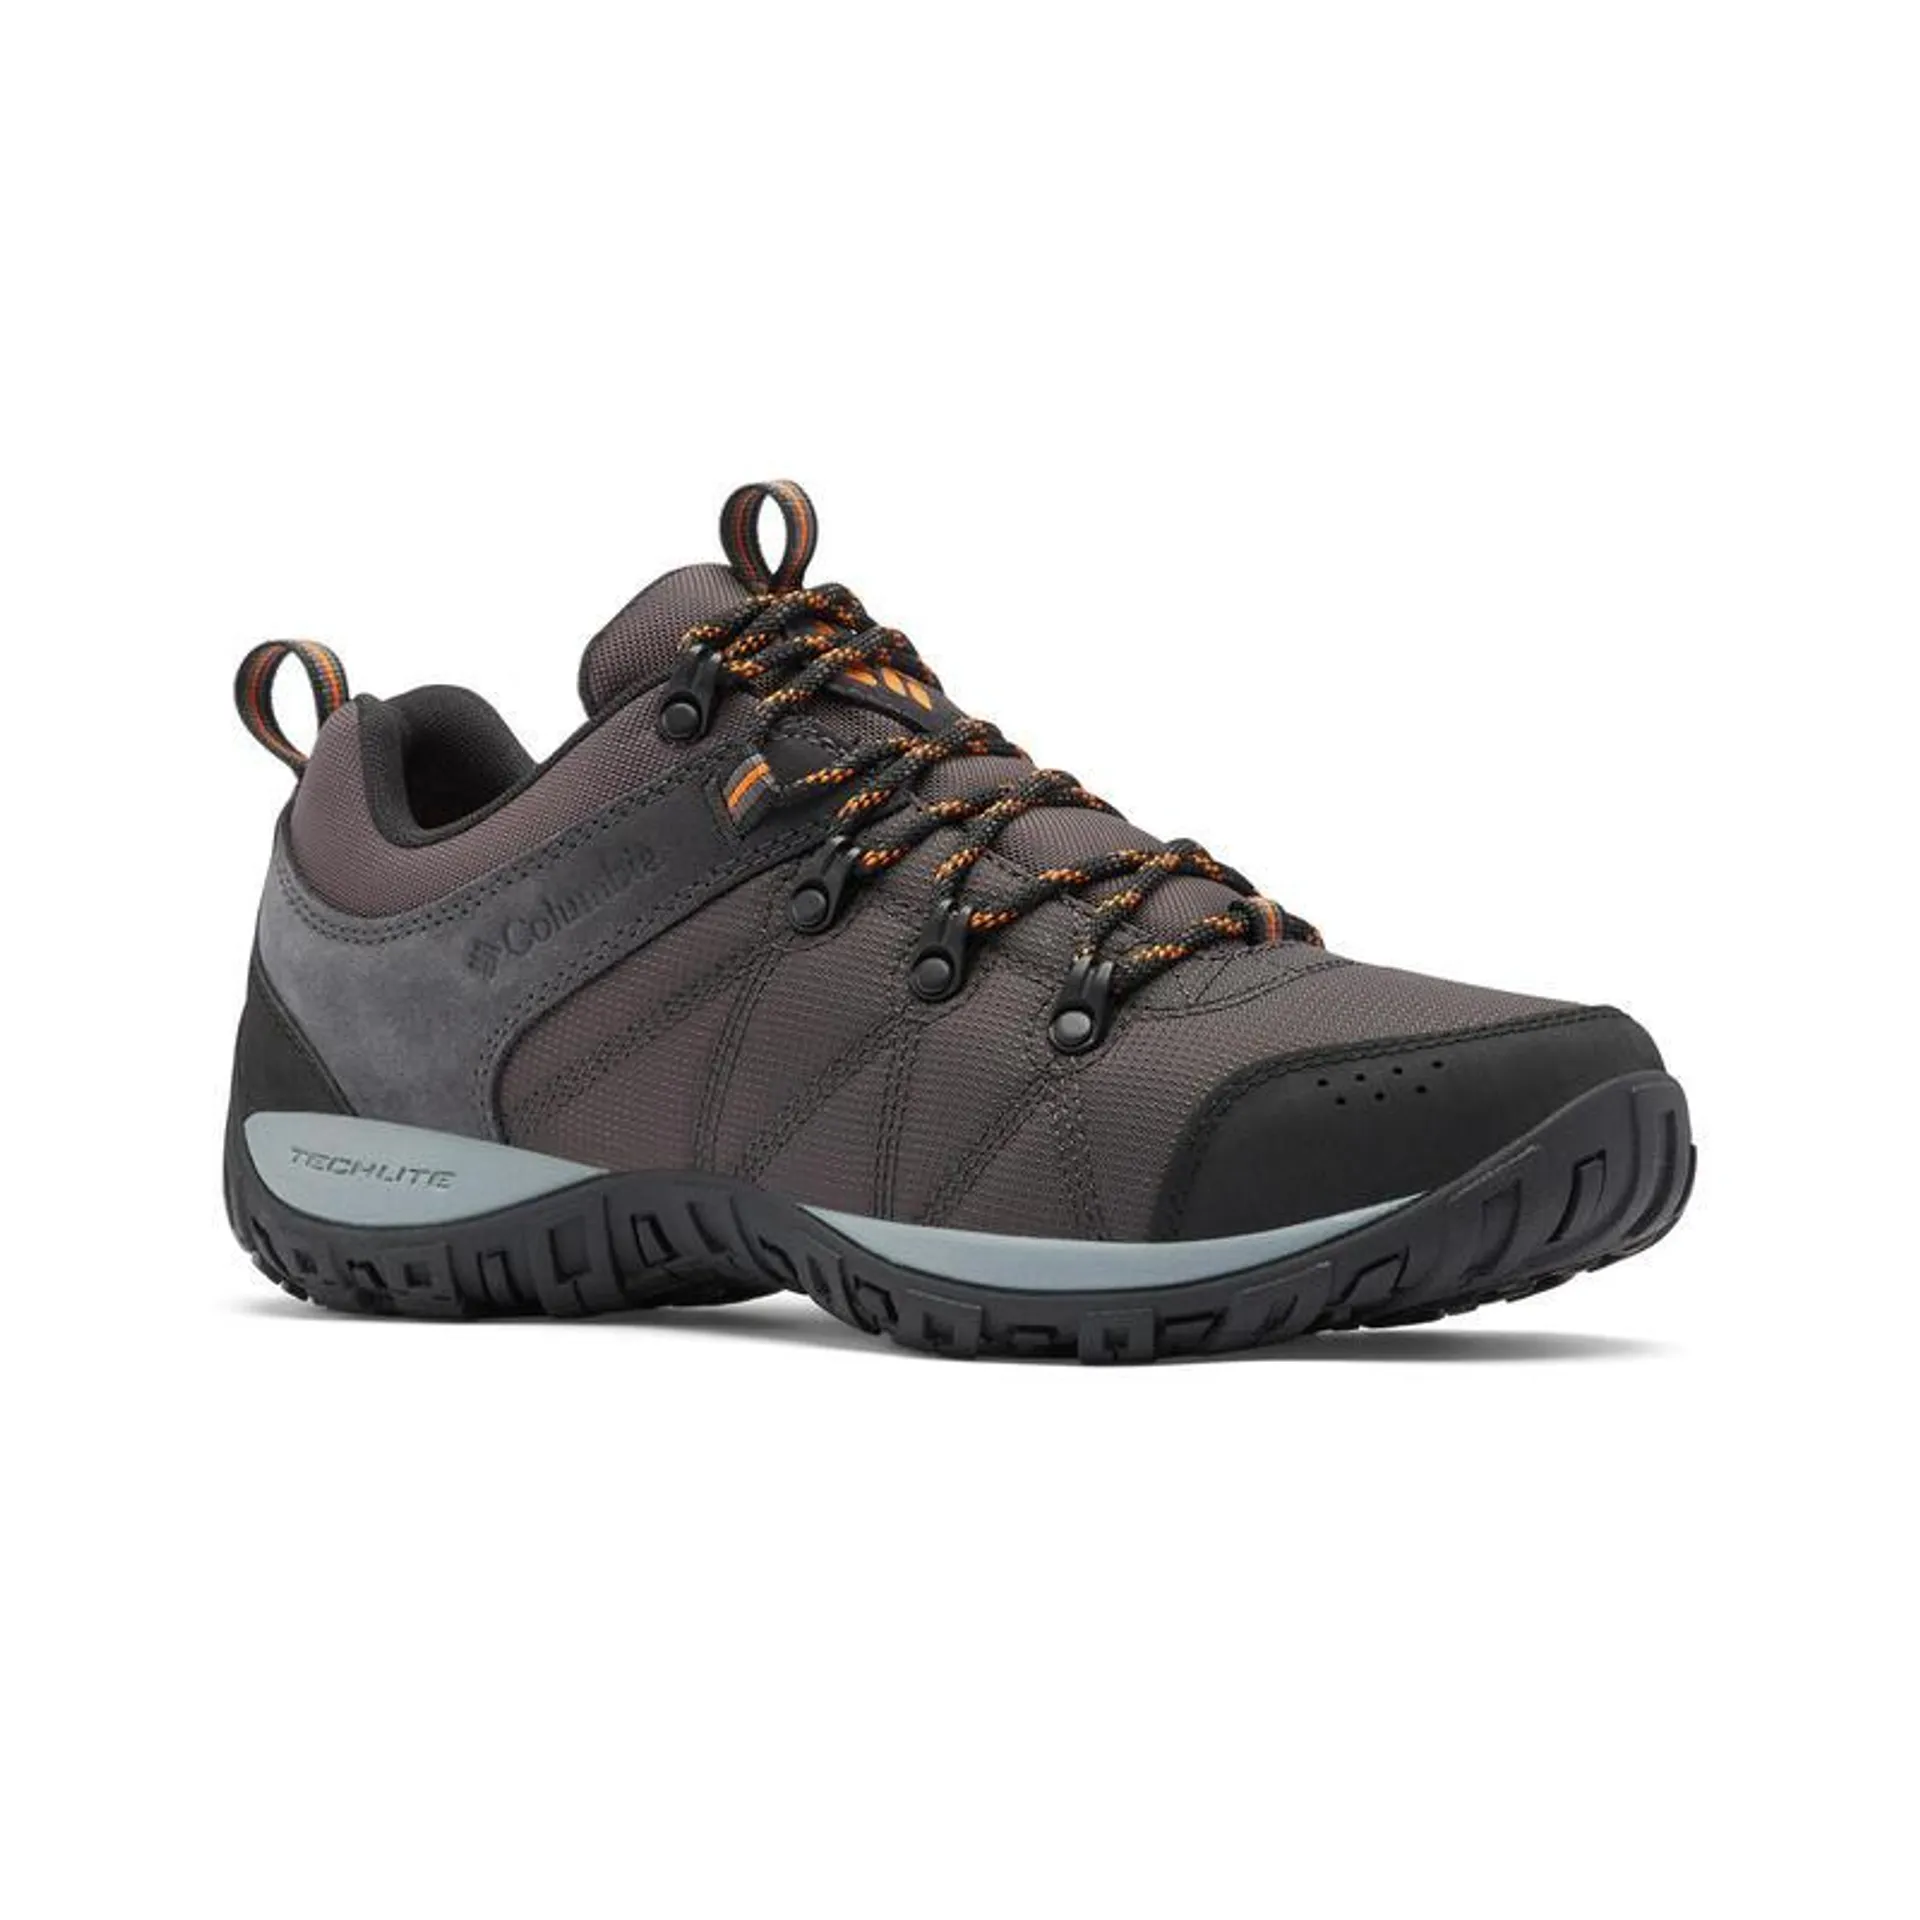 Men’s hiking shoes - Peakfreak Venture Columbia lowtop